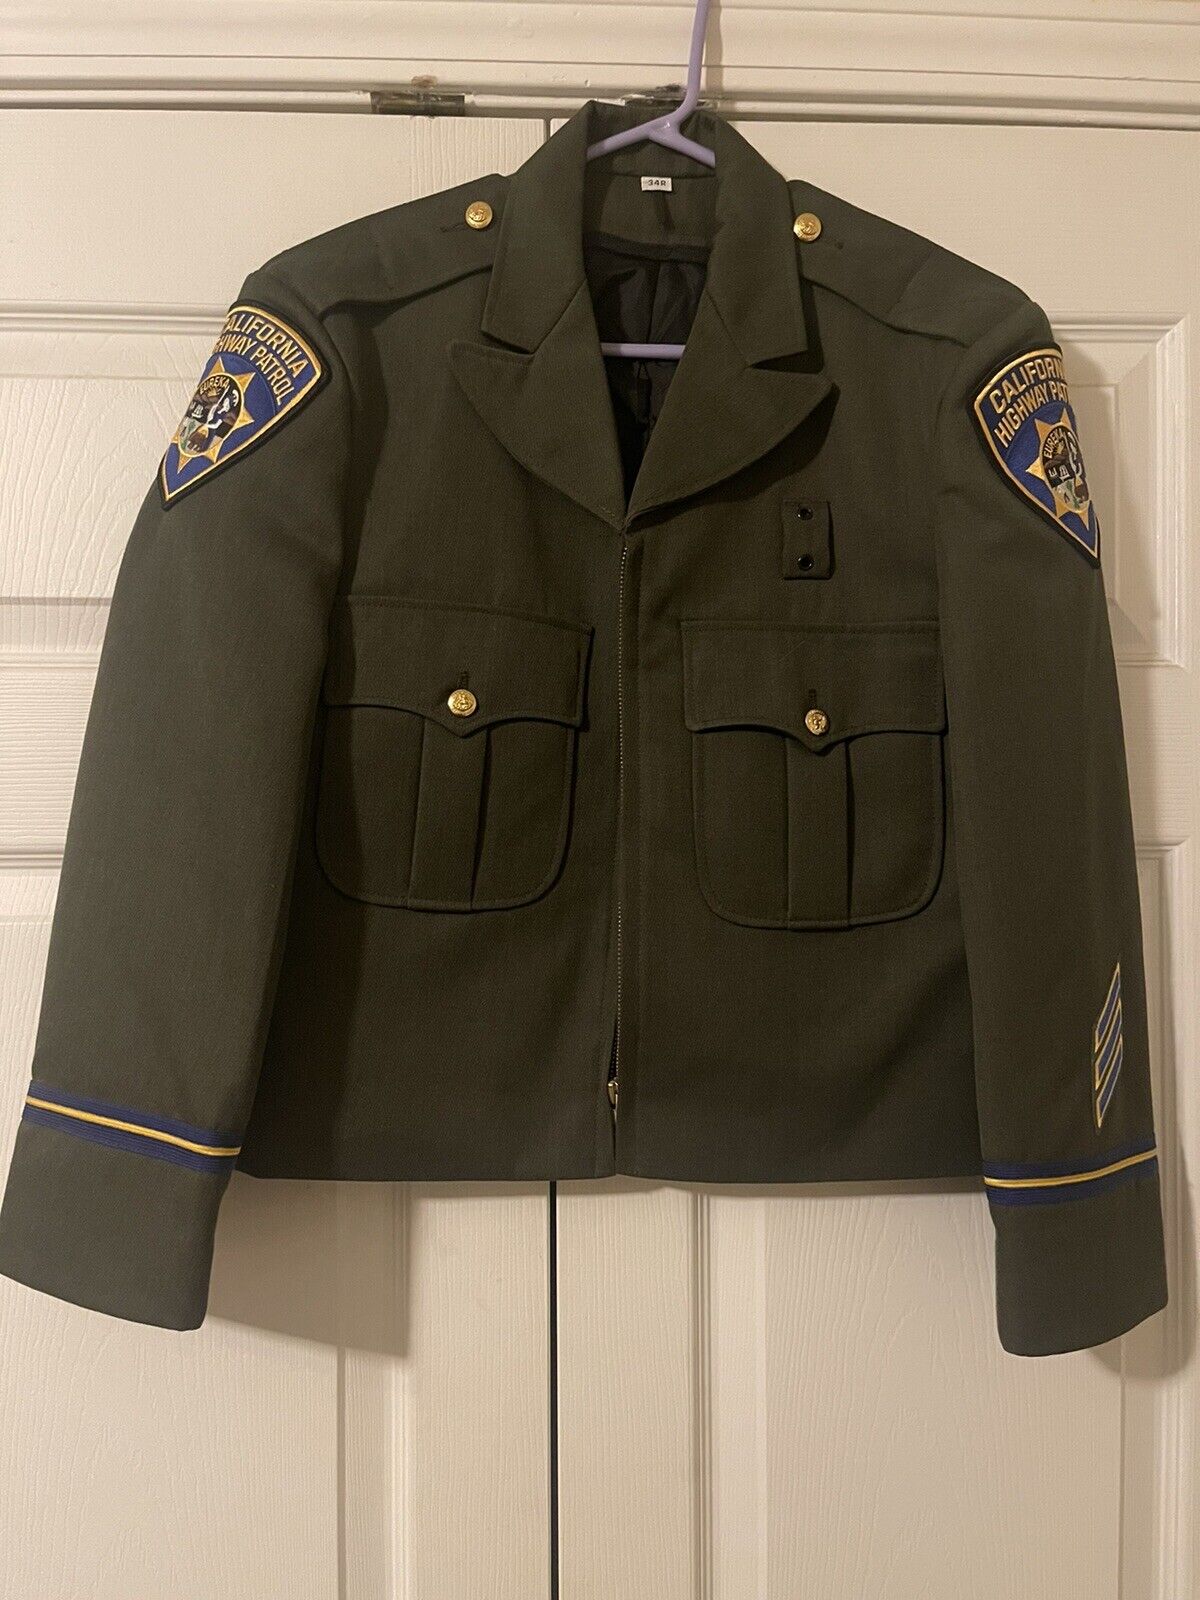 California Highway Patrol Jacket CHP